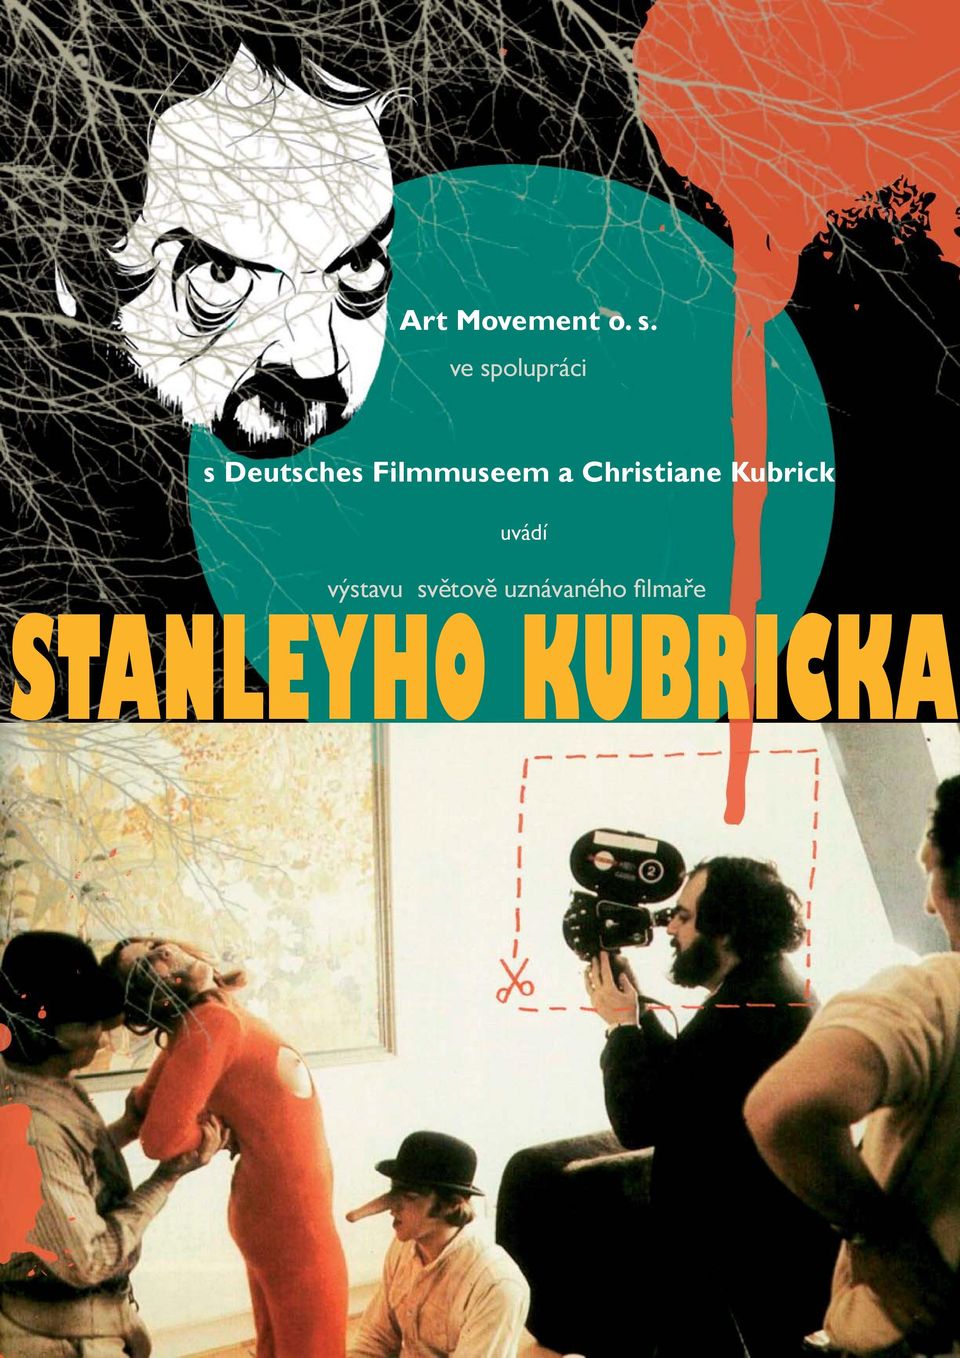 Filmmuseem a Christiane Kubrick